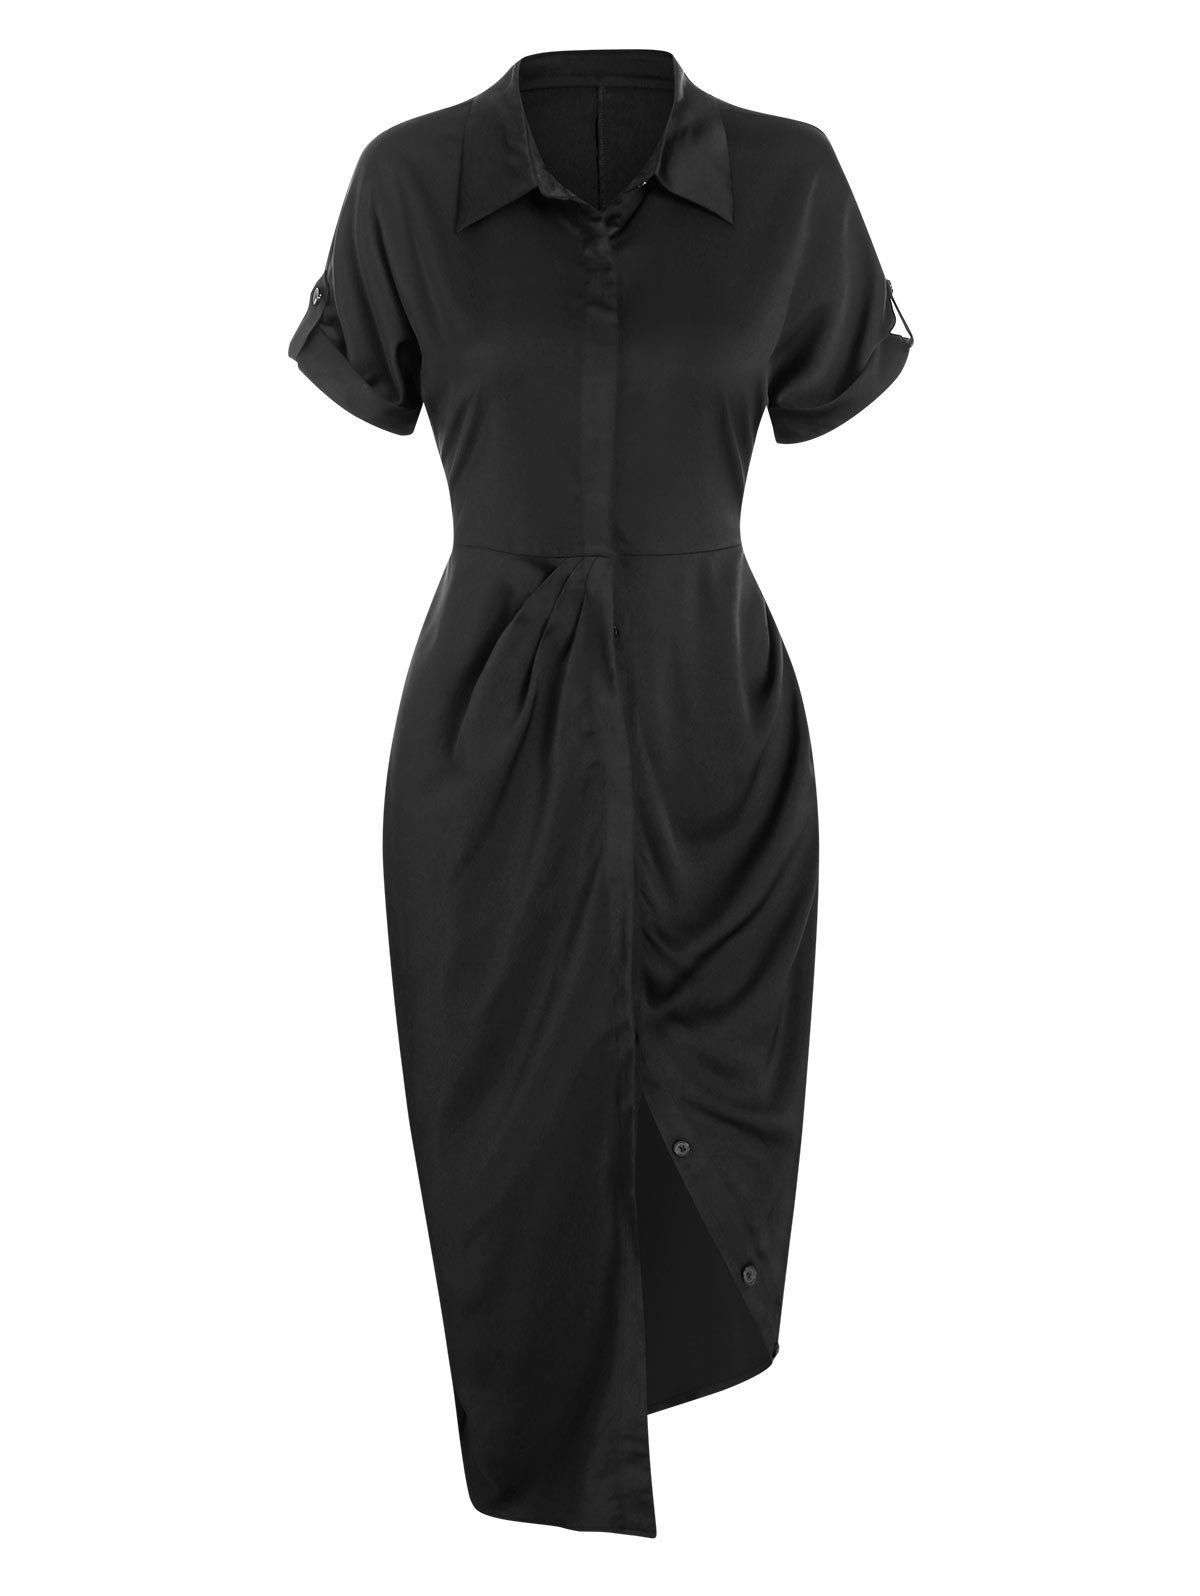 Ruched Asymmetrical Shirt Dress - BLACK M